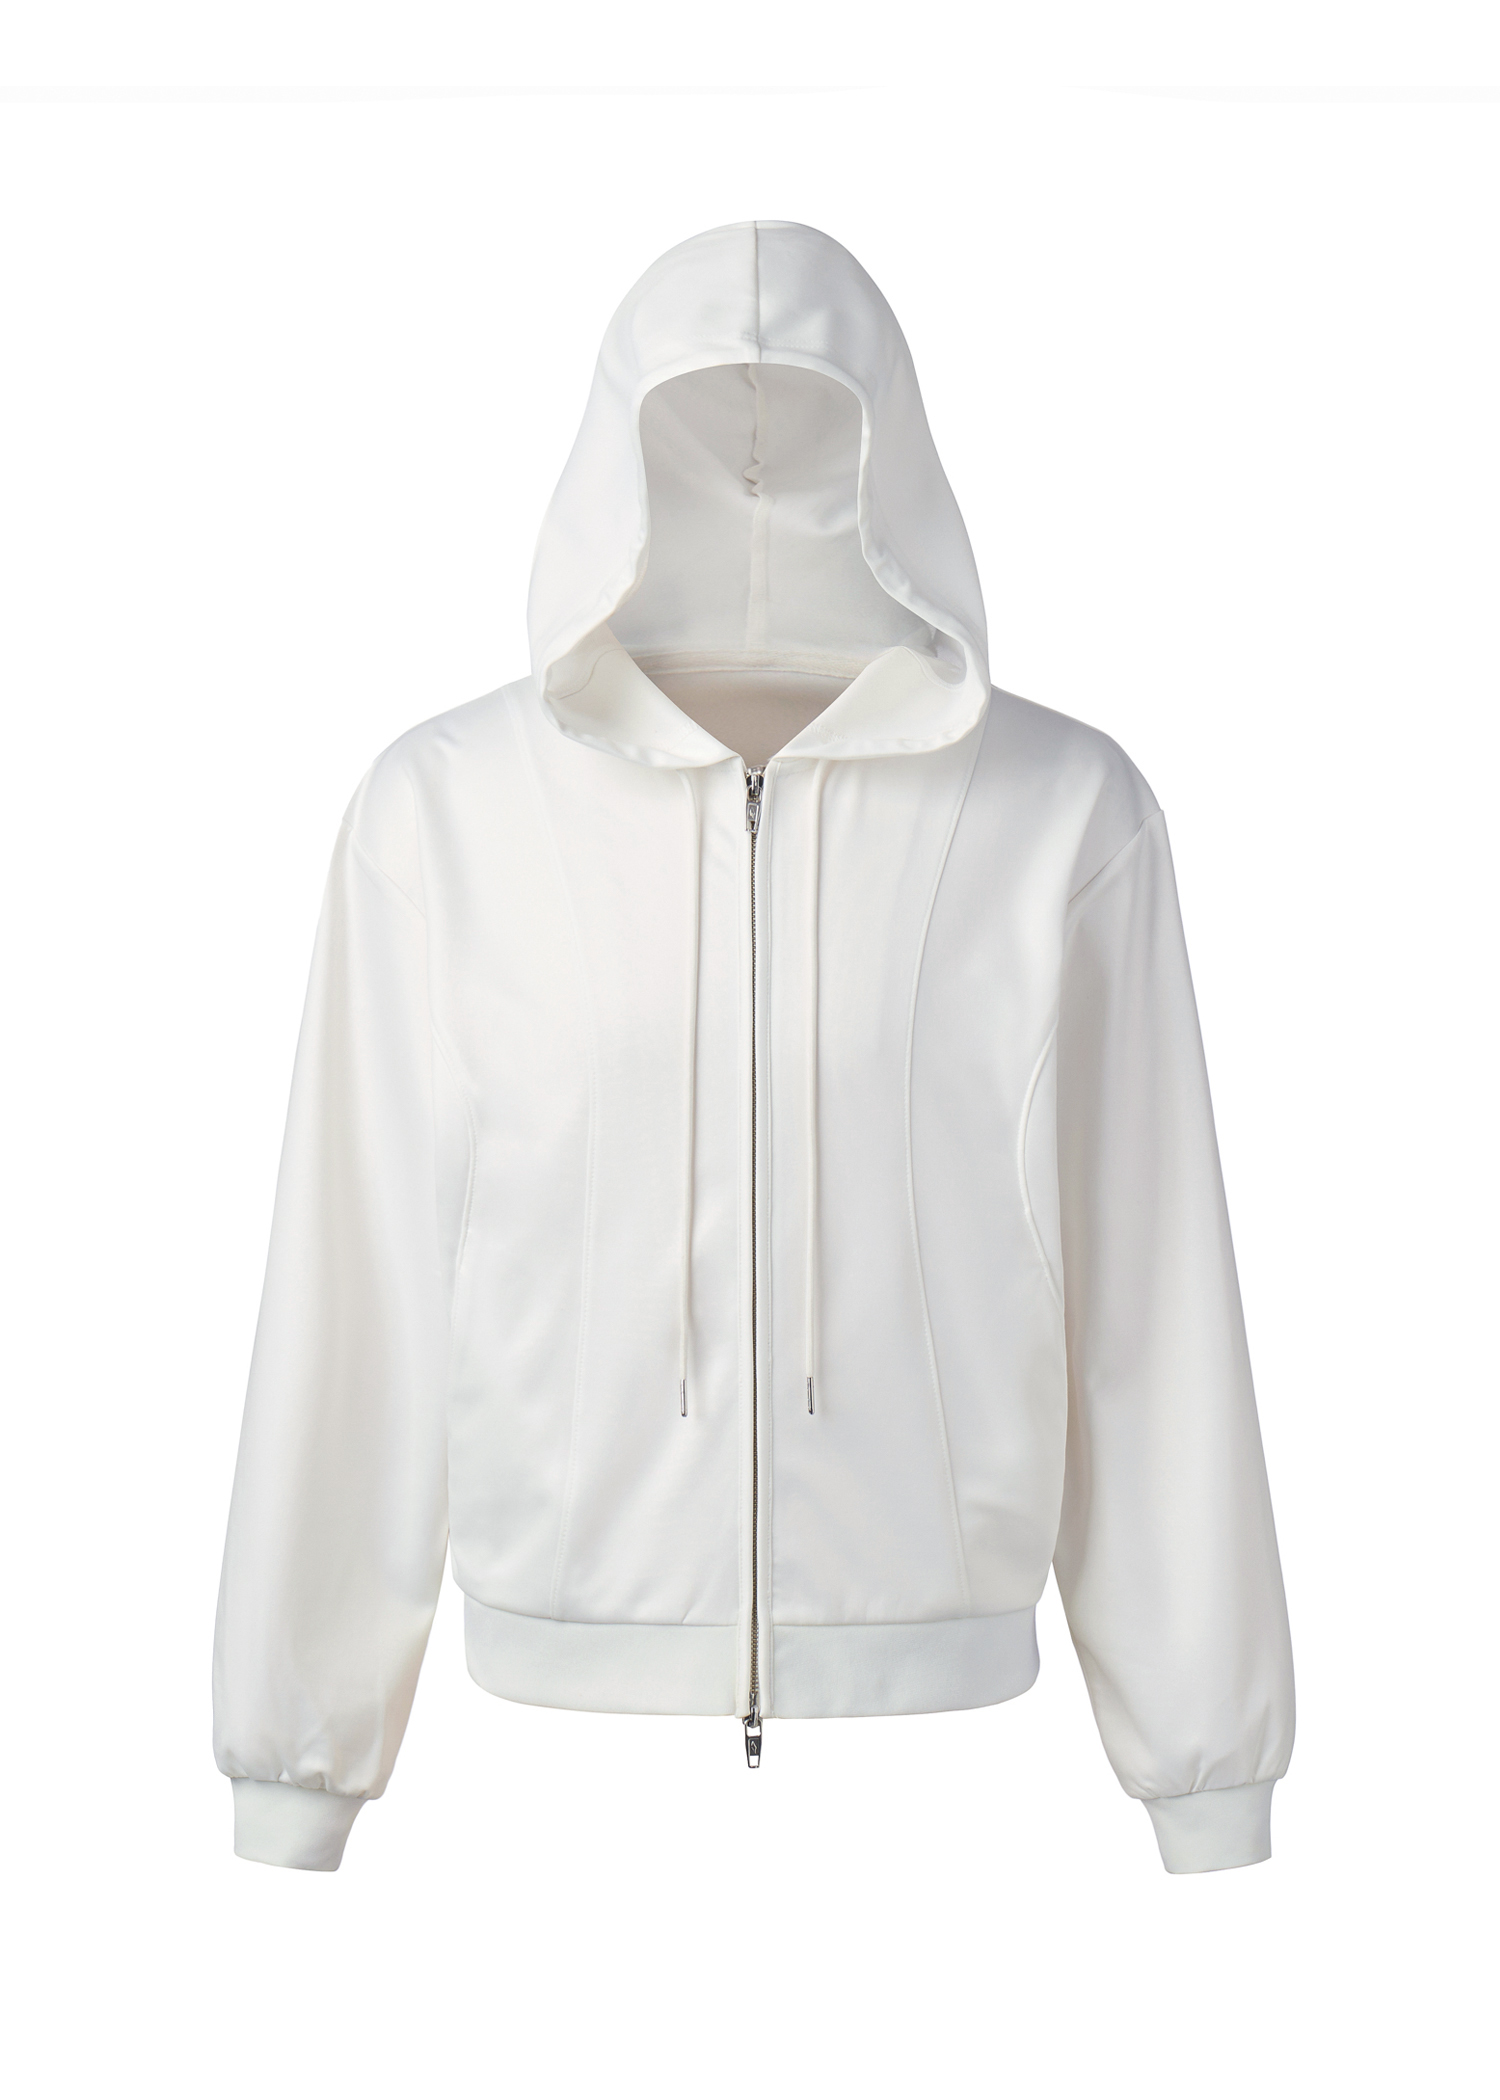 004-23 athleisure zip-up hoodie - white